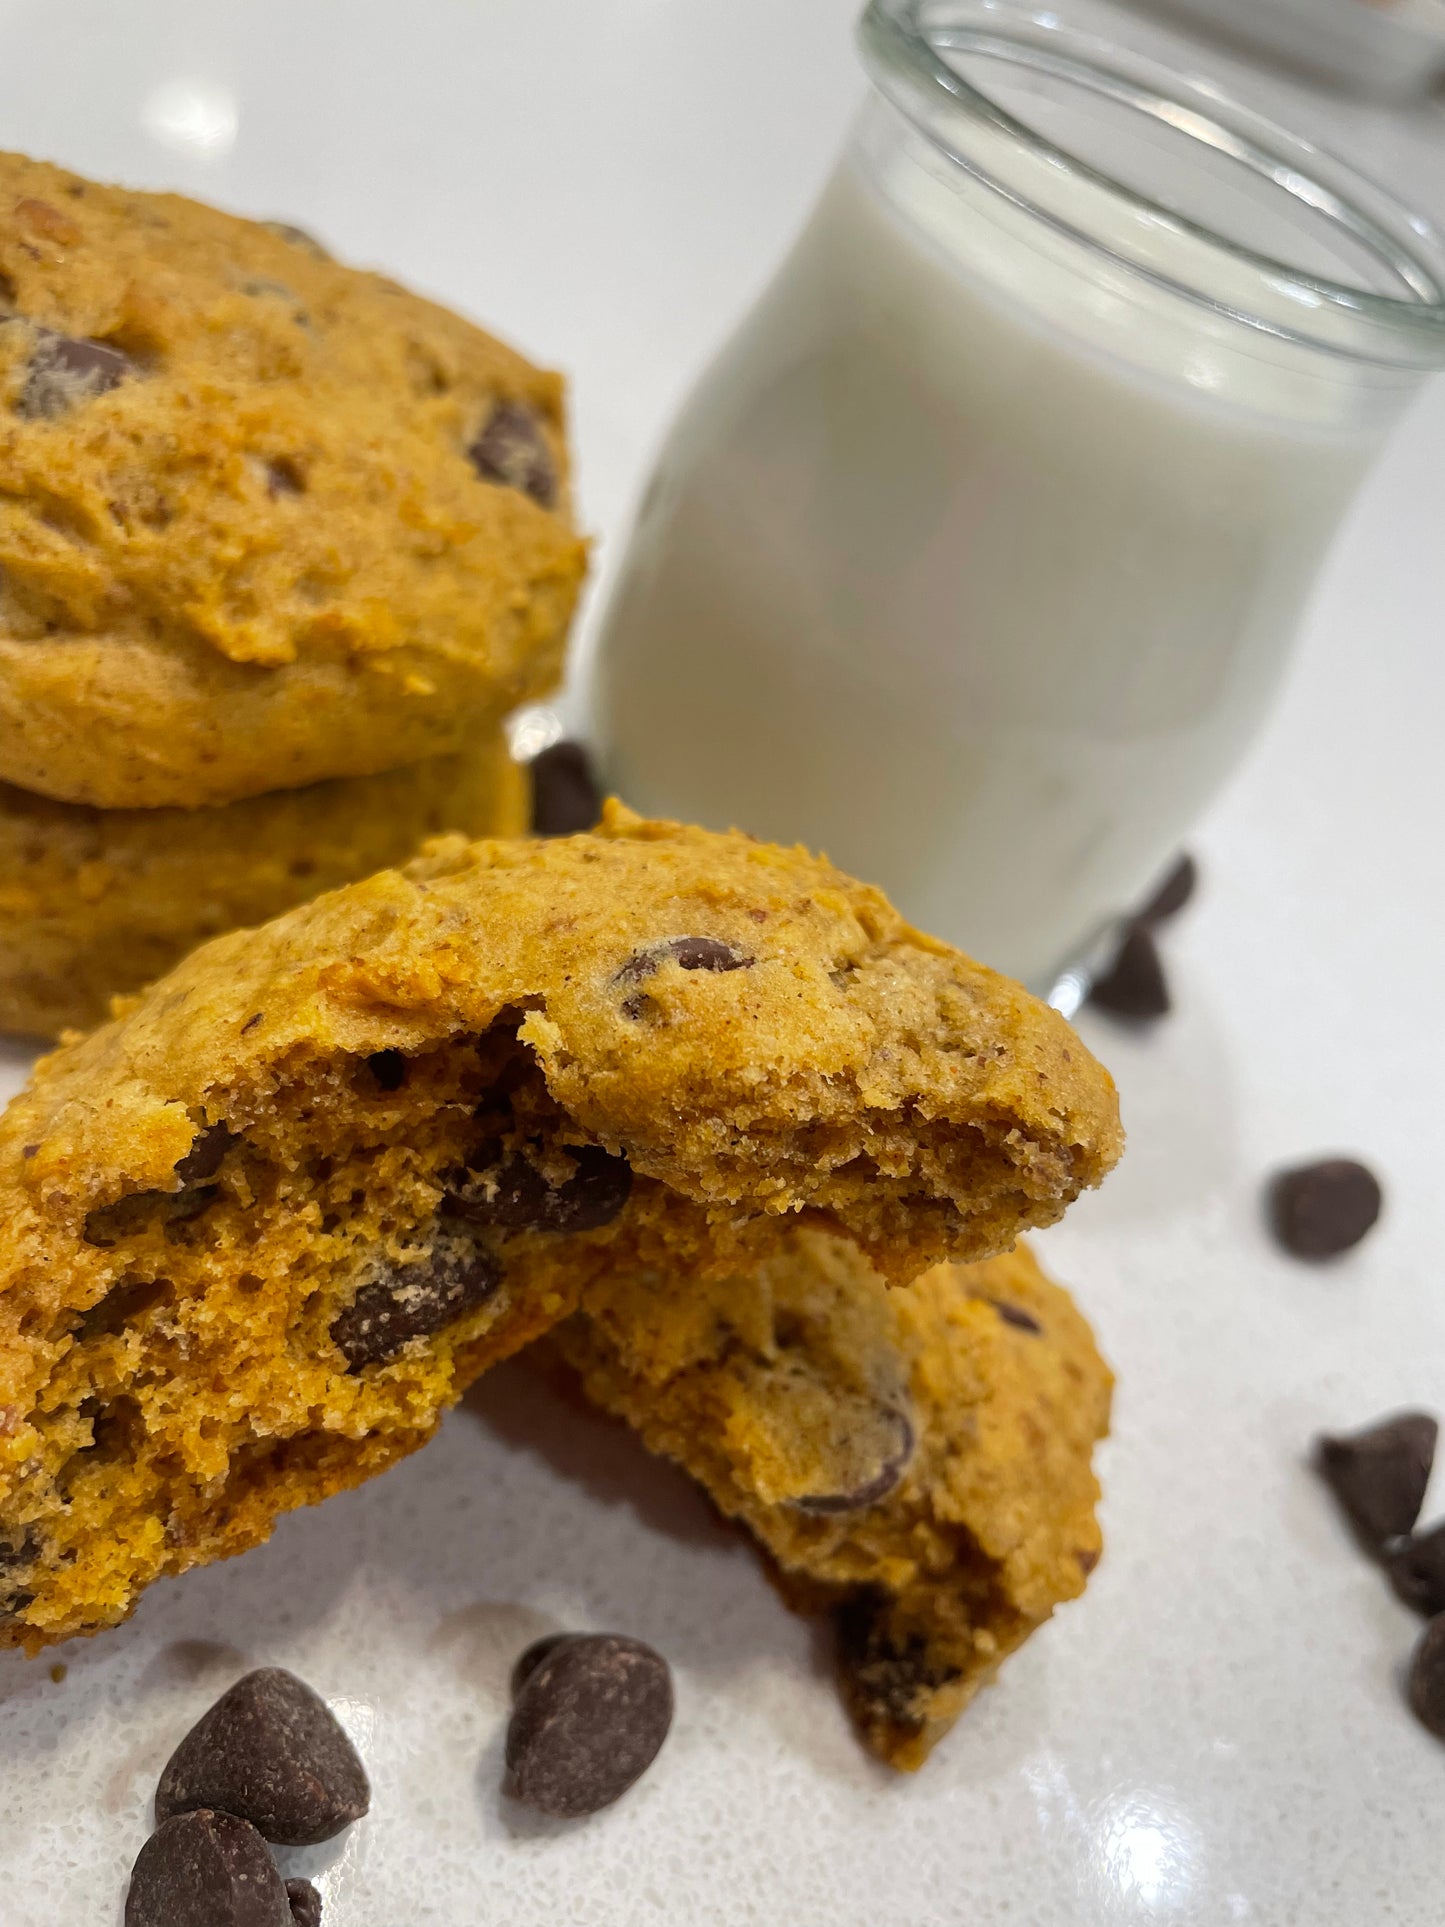 Regular Boost Lactation Cookies Dry Pack